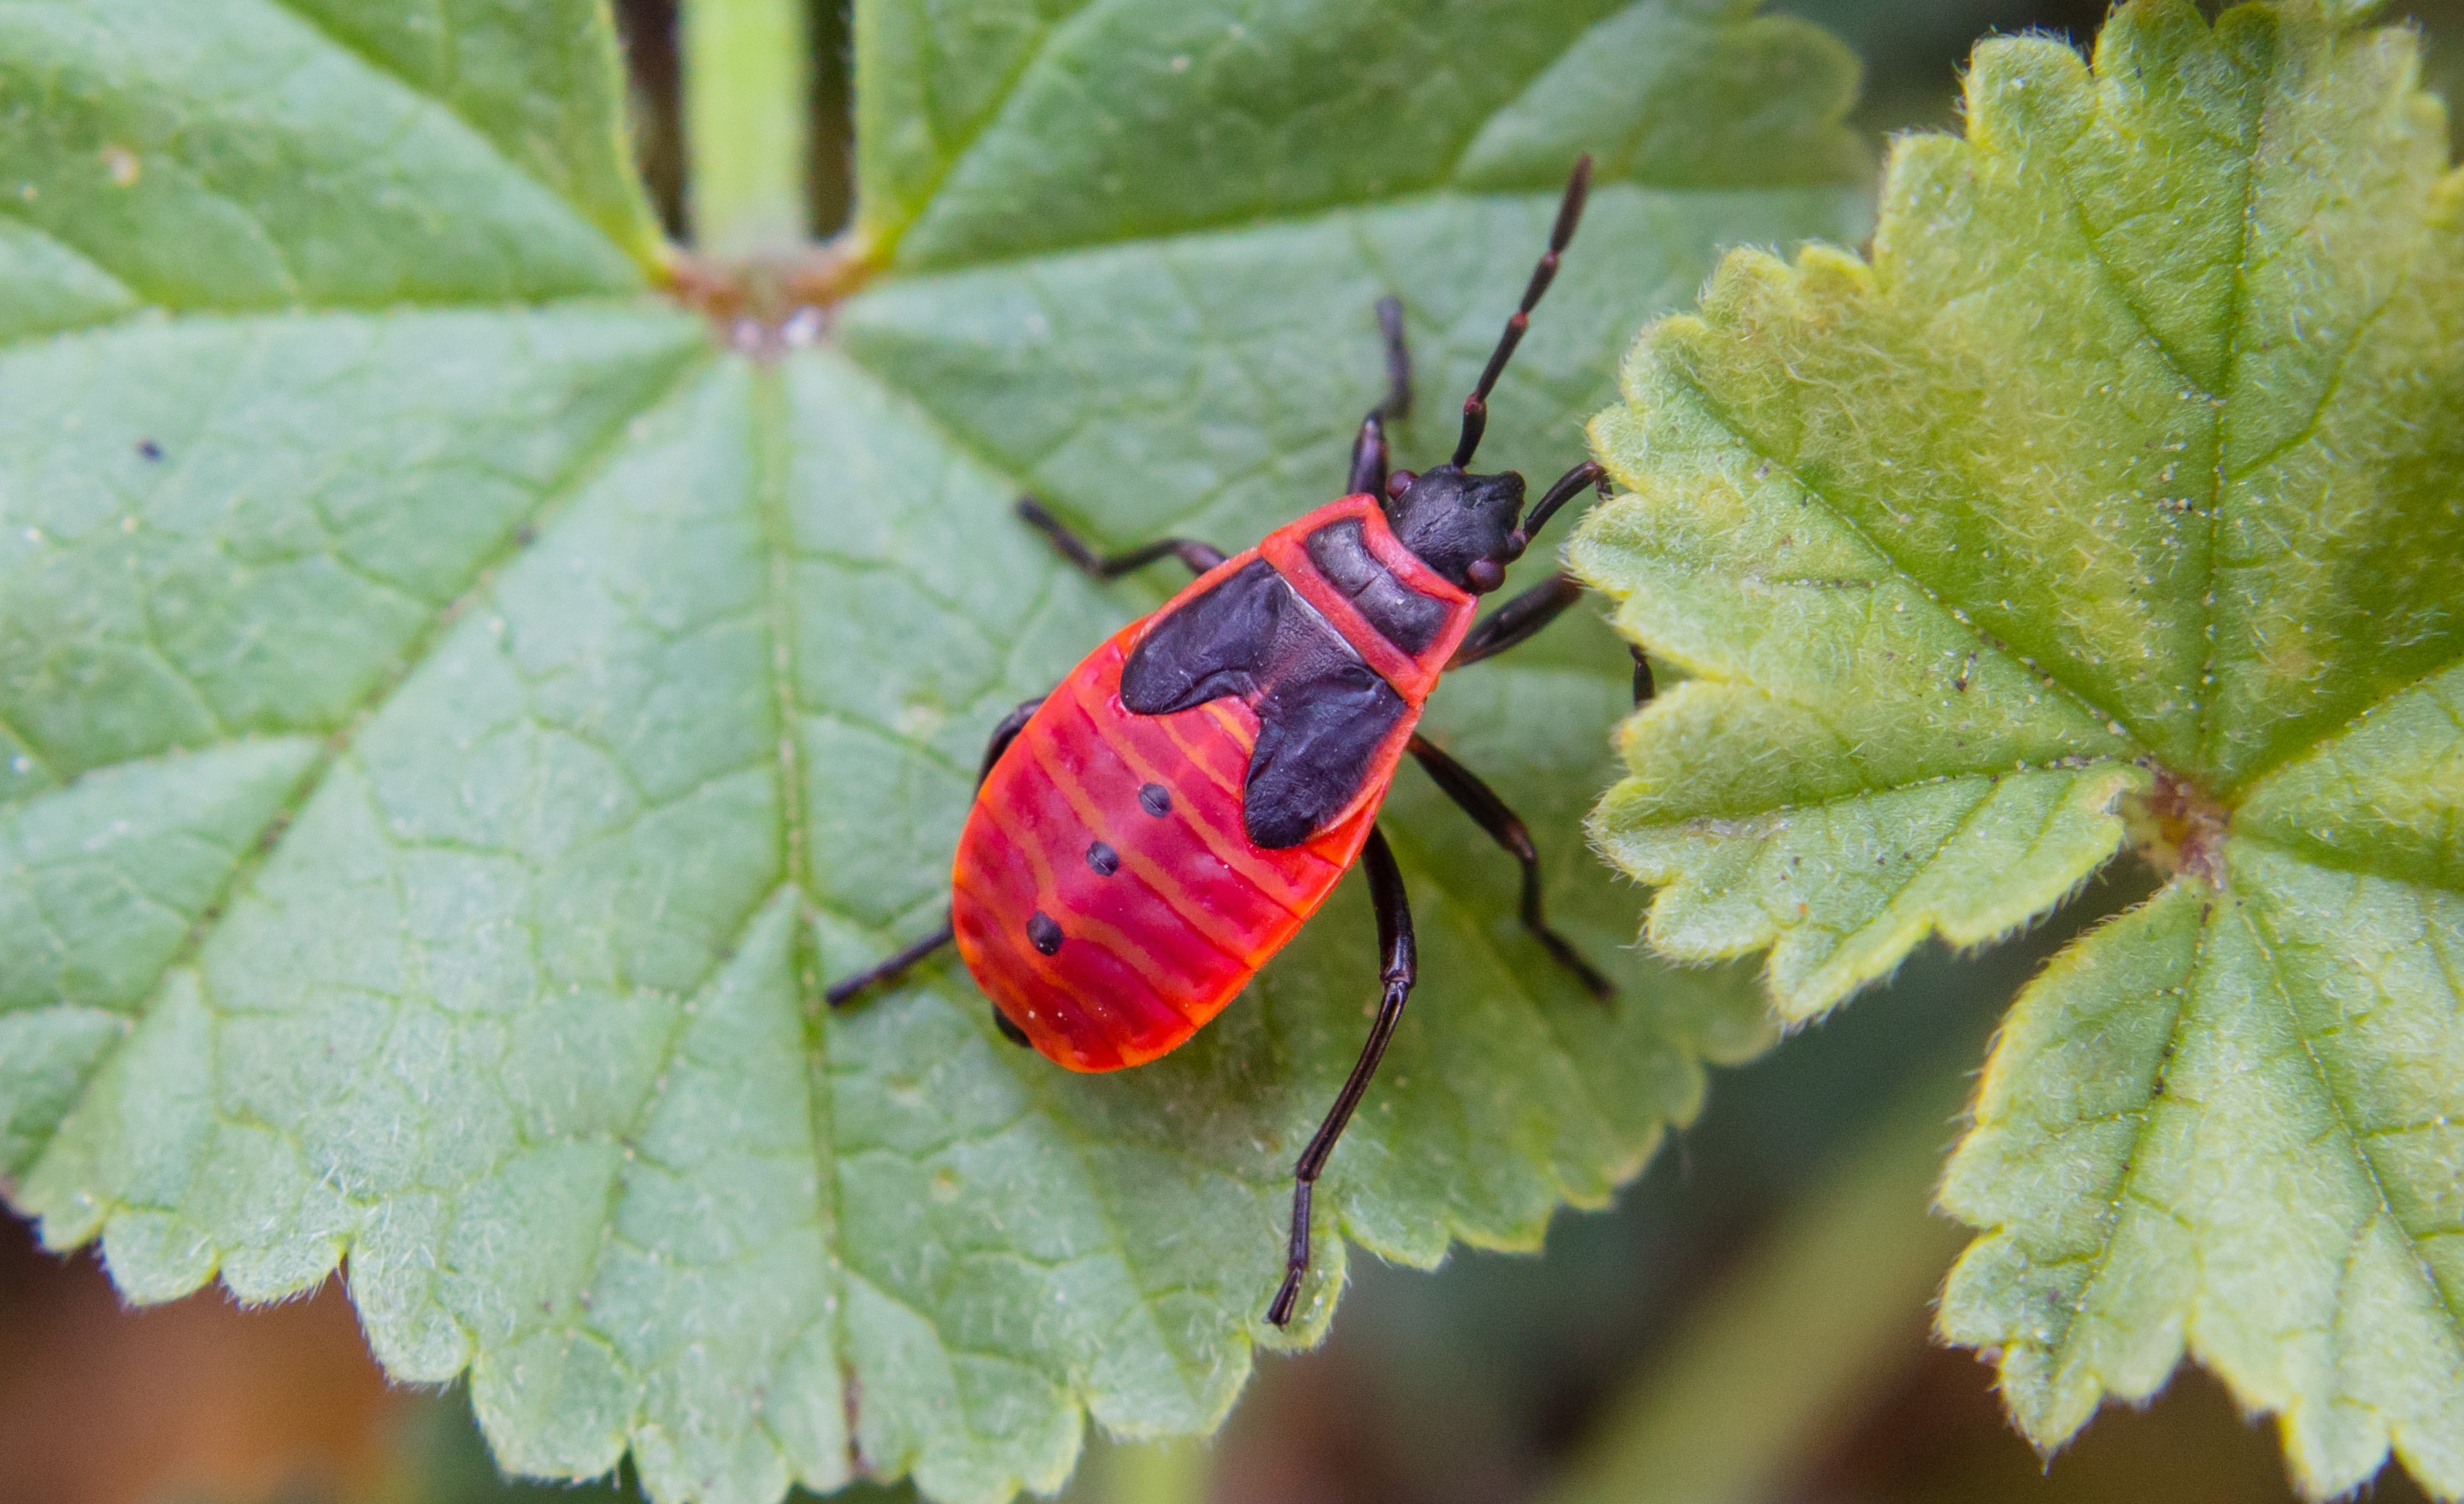 Fig. 2. Red firebug nymph near adulthood.